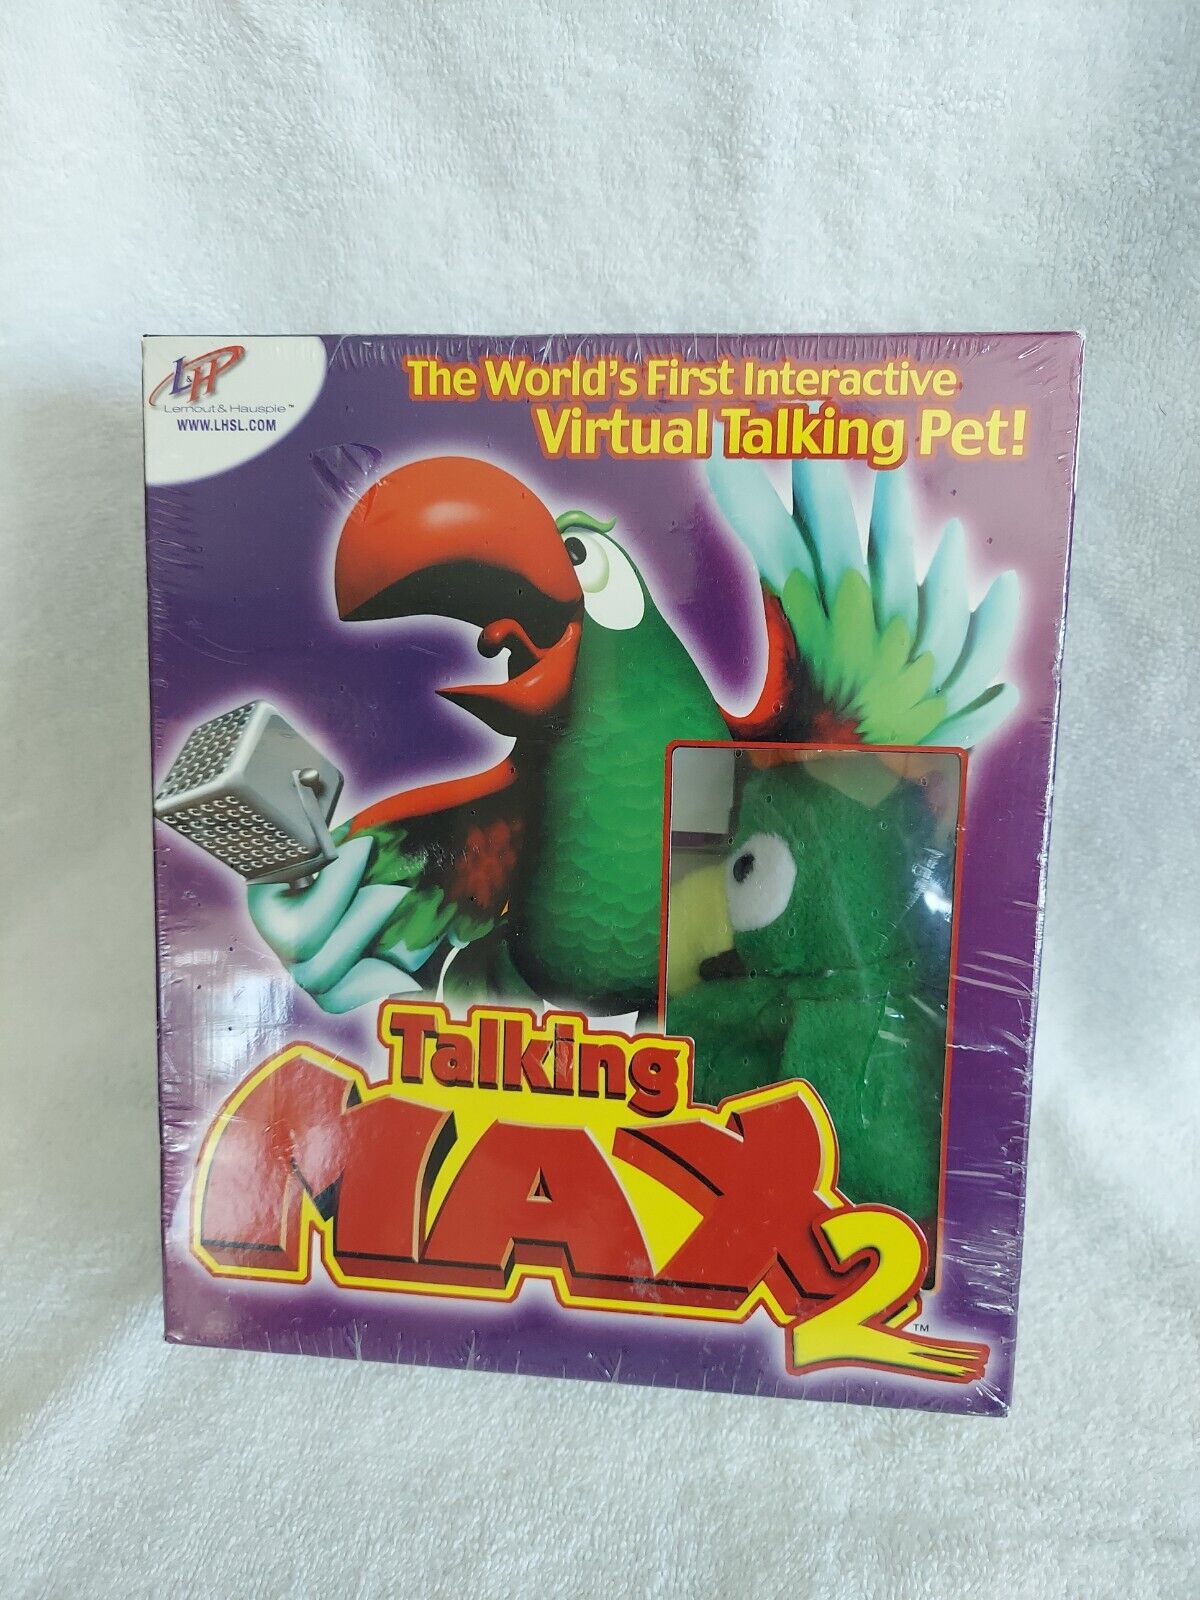 Talking Max 2 Virtual Pet Parrot Big Box PC Software 1999 NEW SEALED RARE Nice